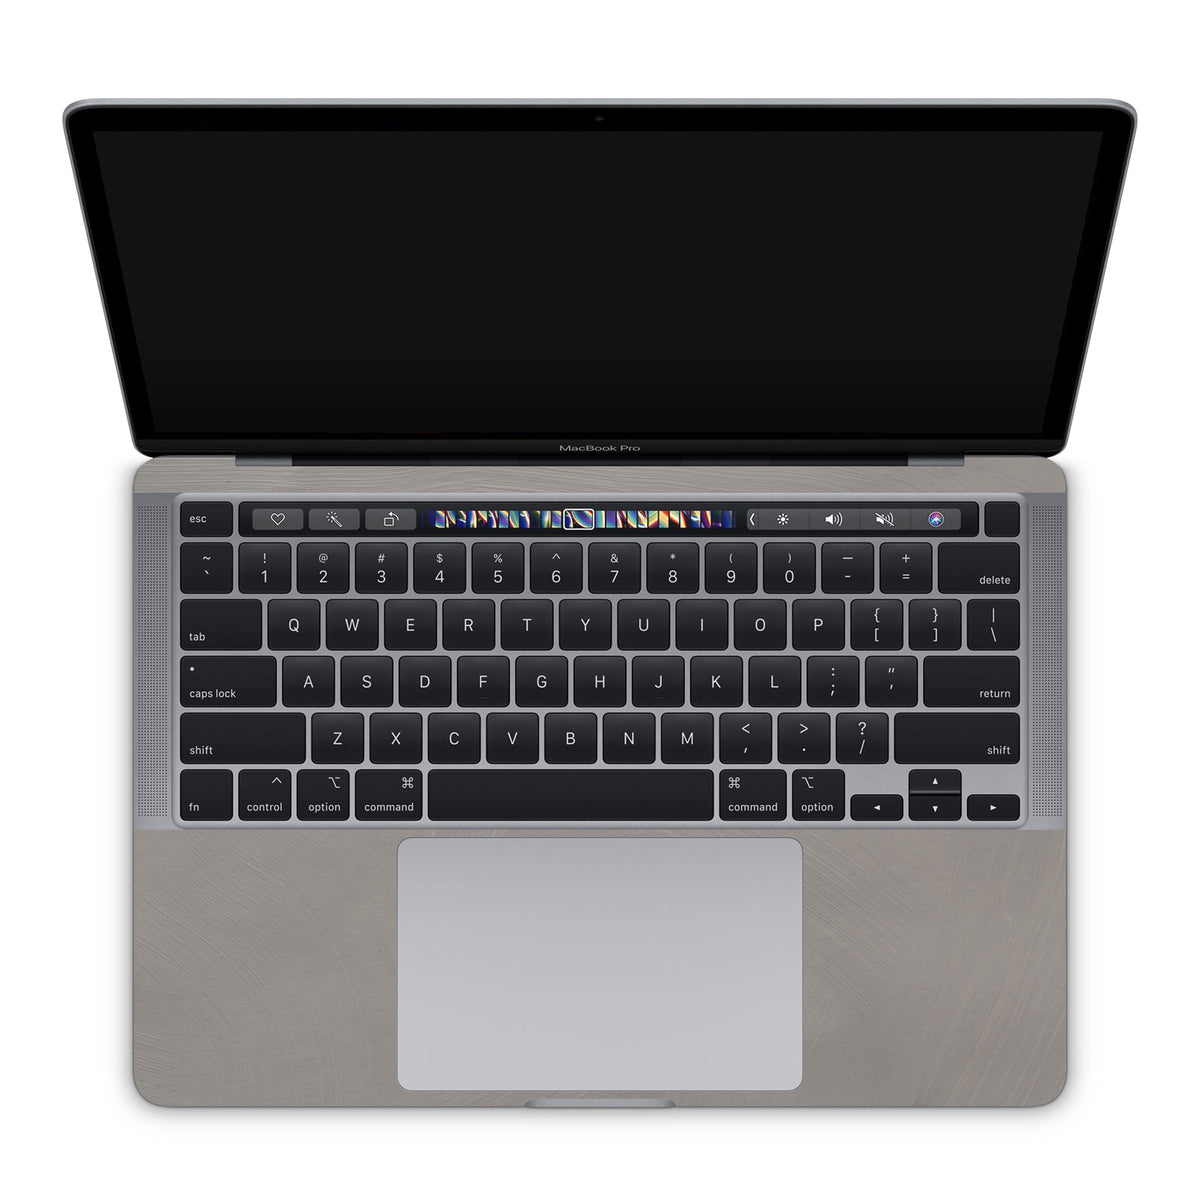 Overcast (MacBook Skin)